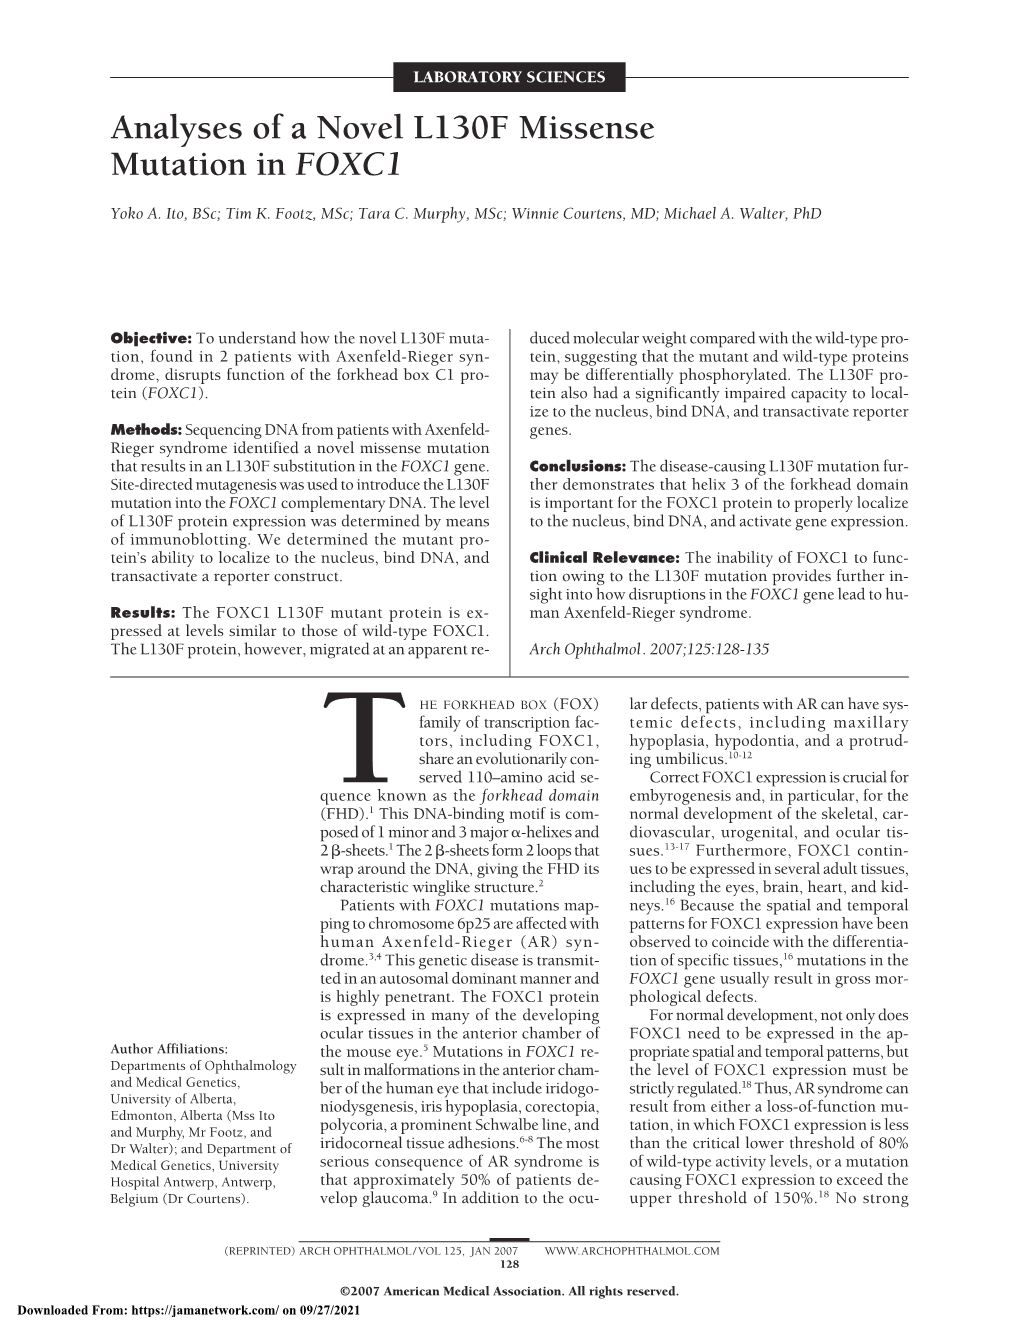 Analyses of a Novel L130F Missense Mutation in FOXC1